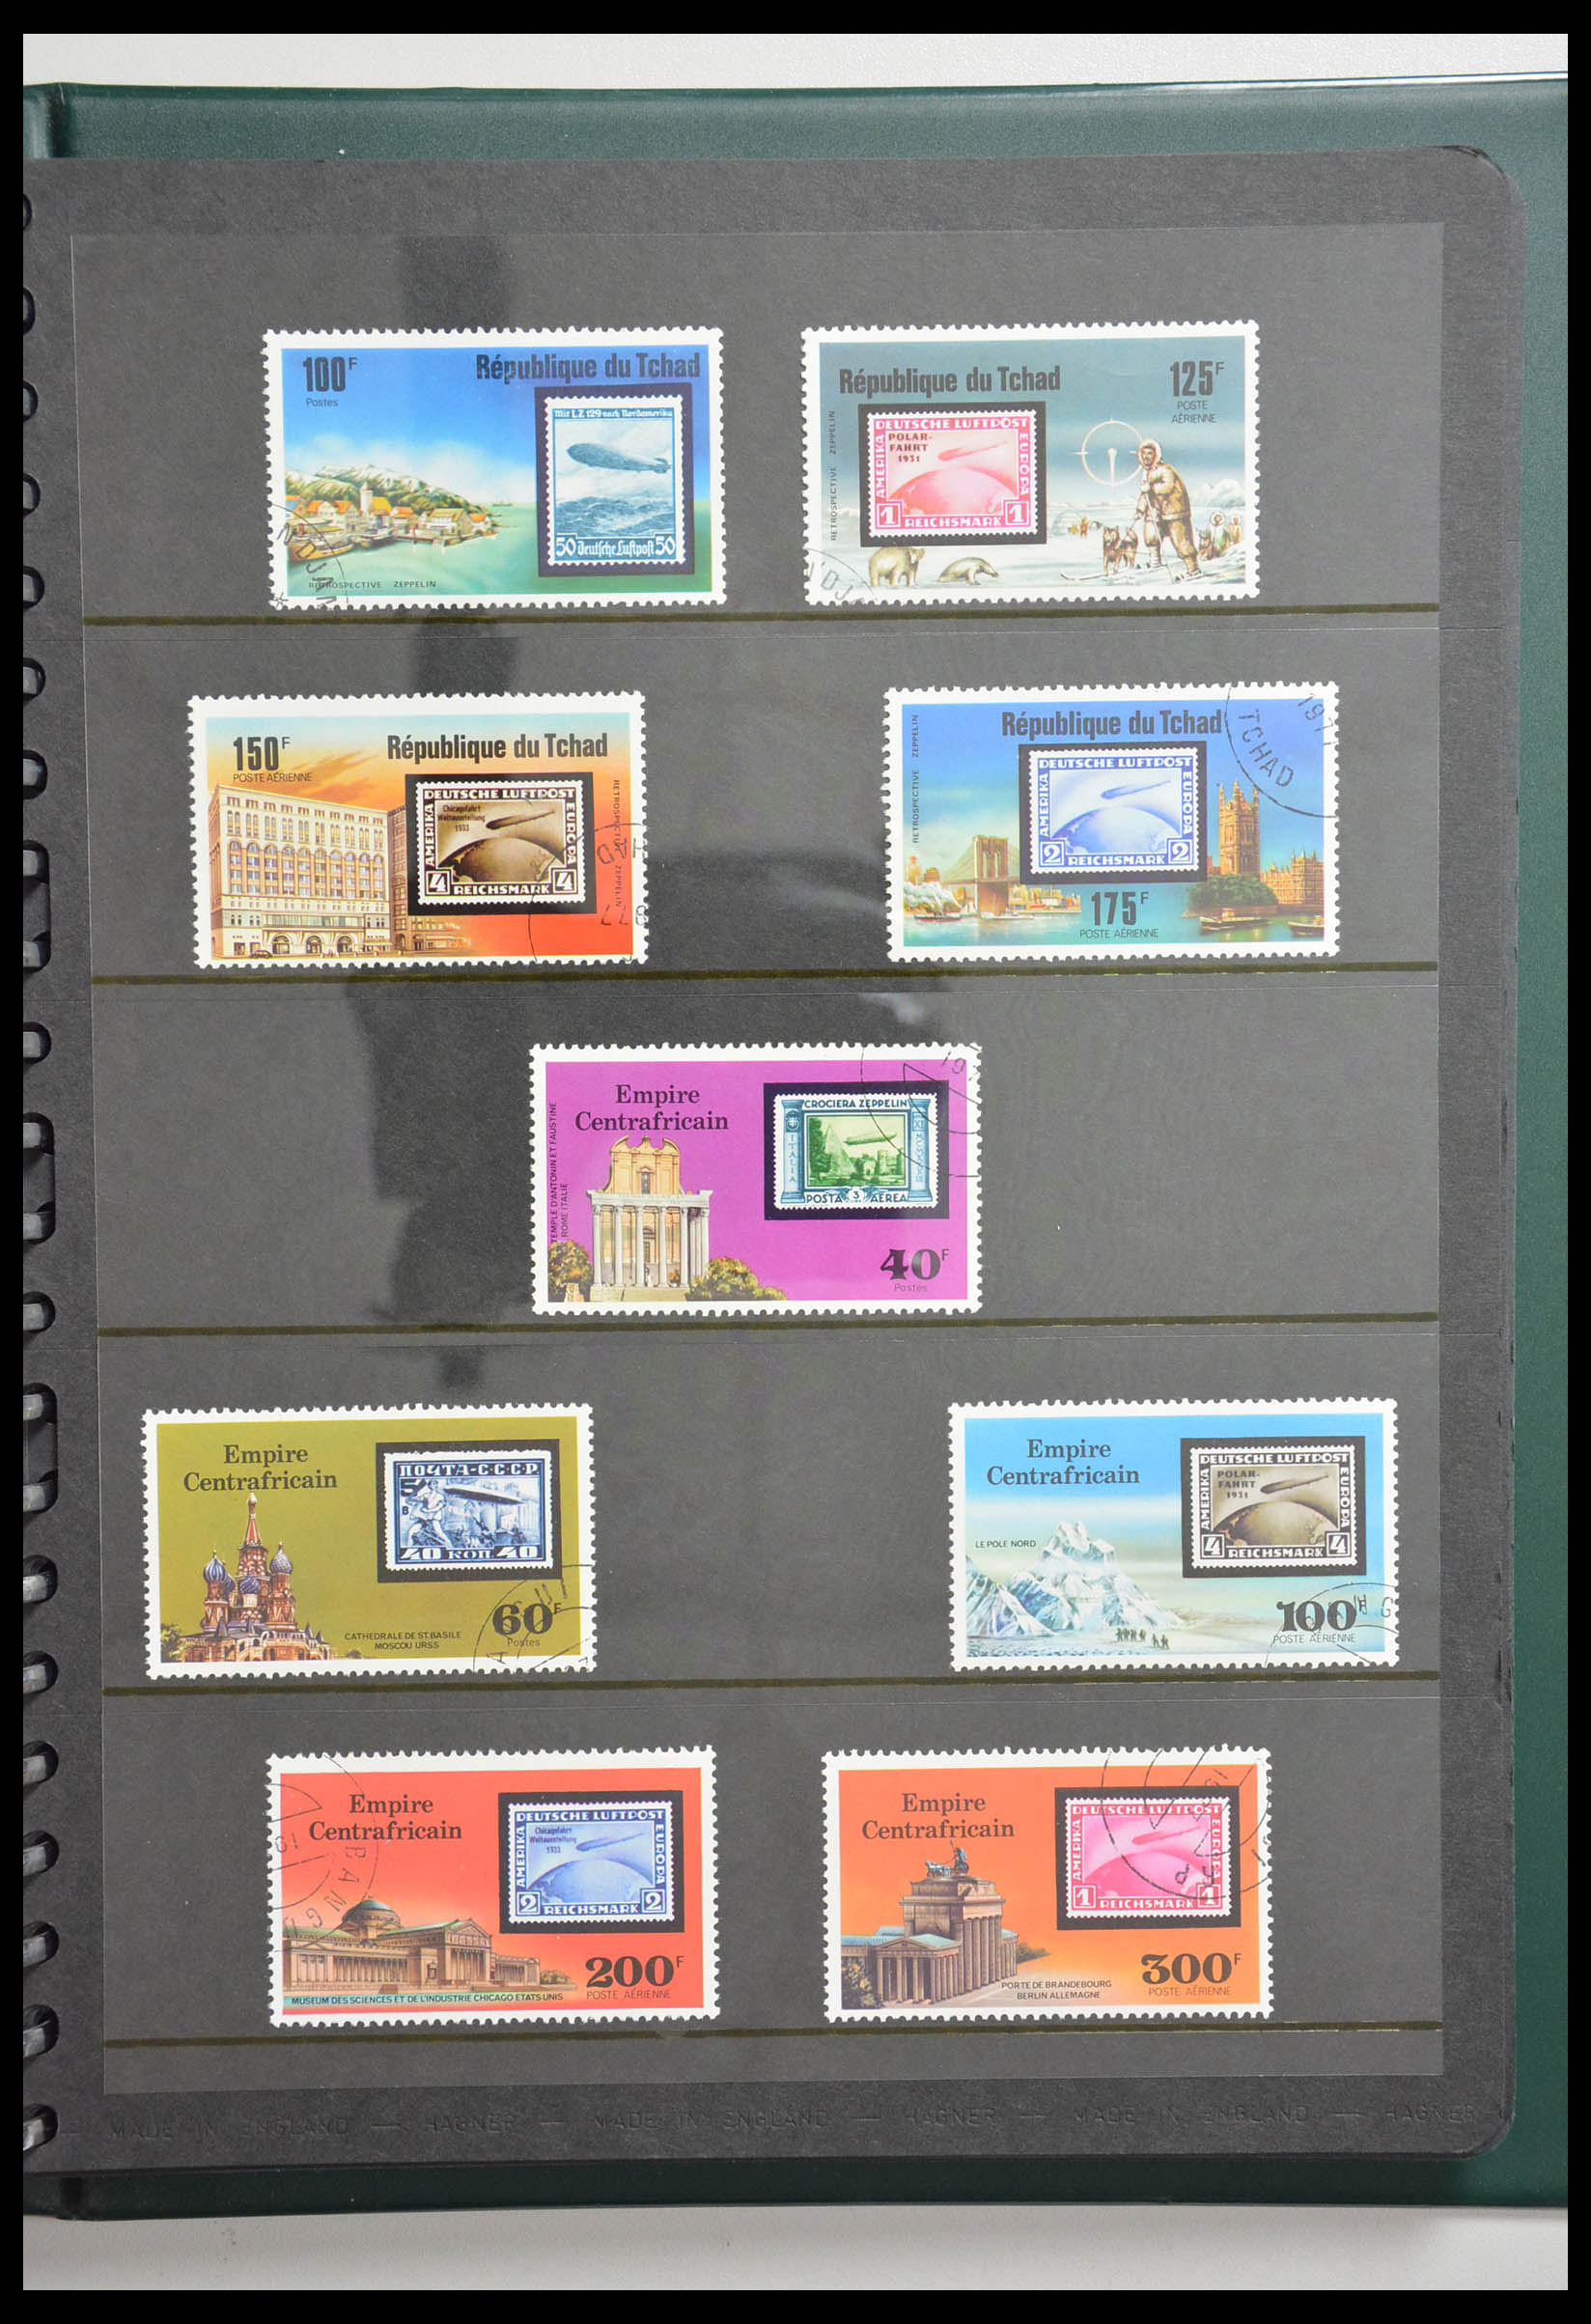 28337 027 - 28337 Postzegel op postzegel 1840-2001.